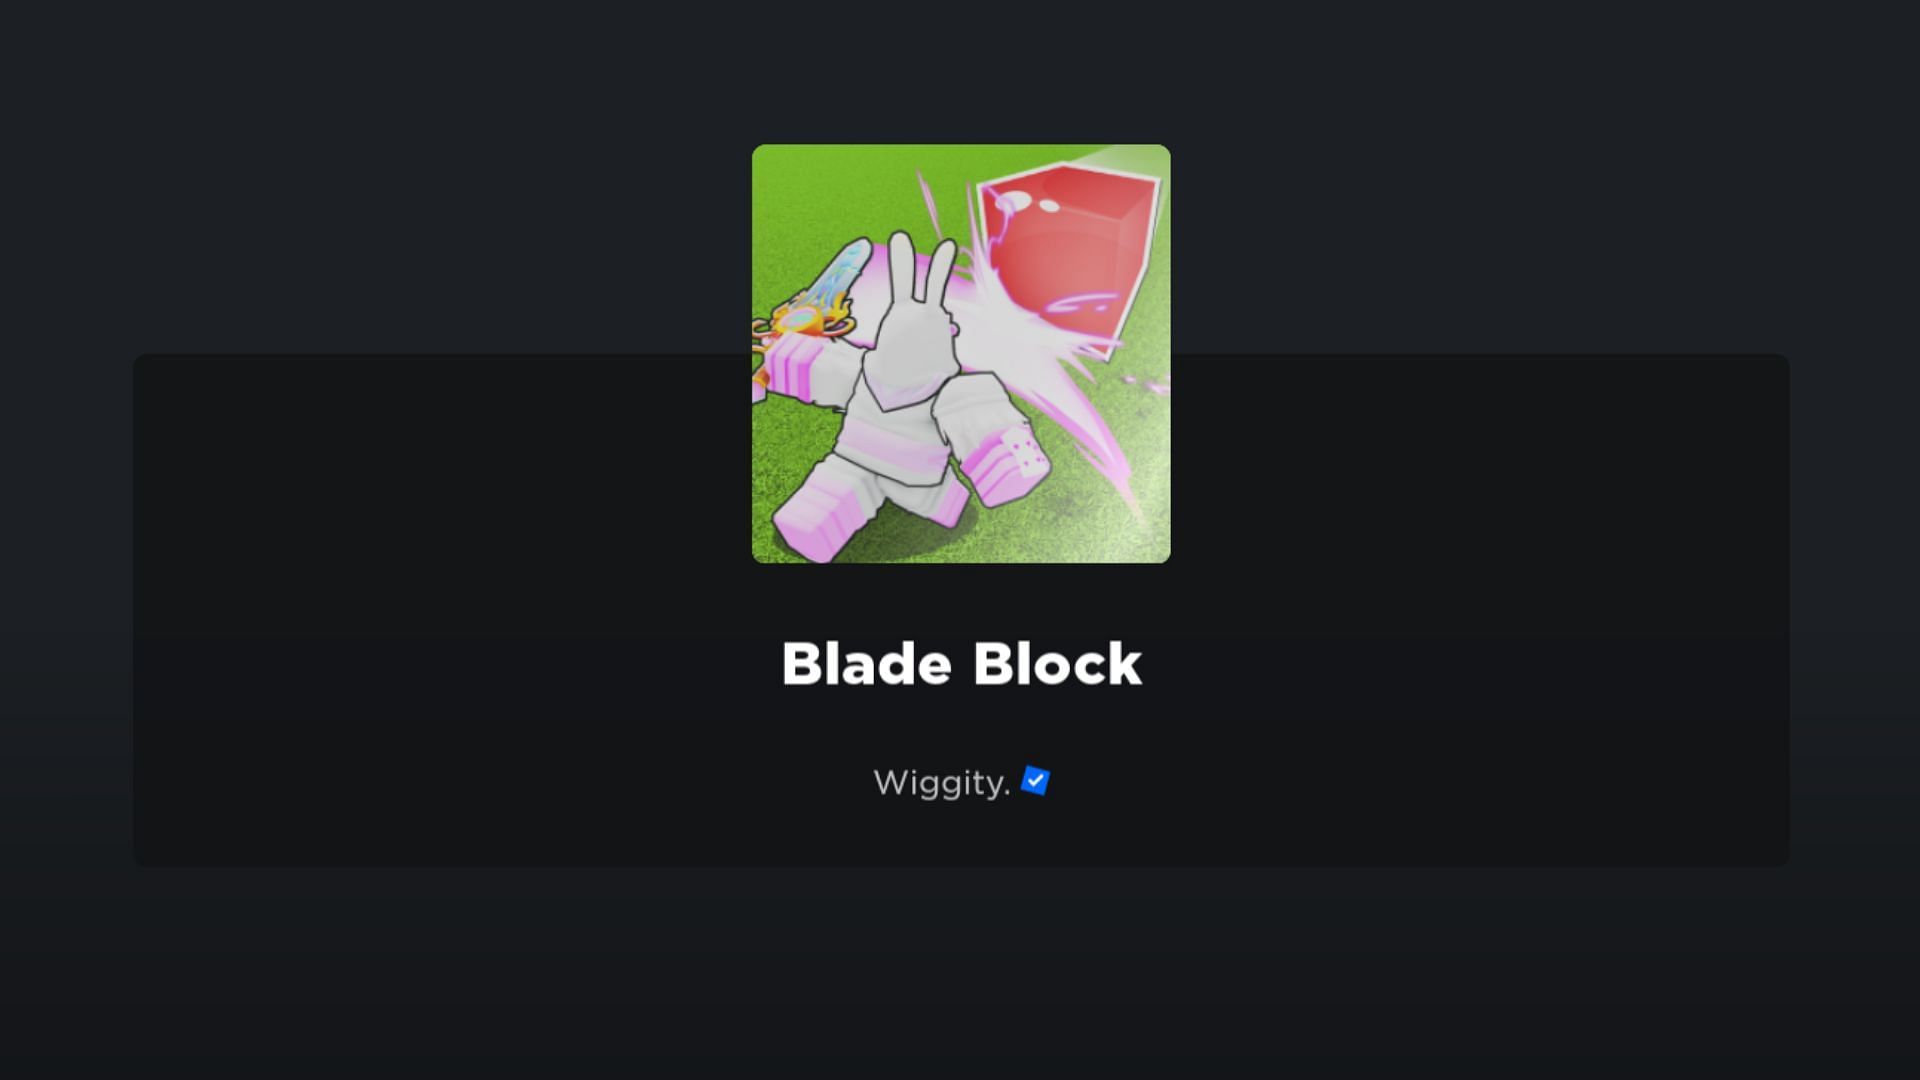  Blade Block codes 